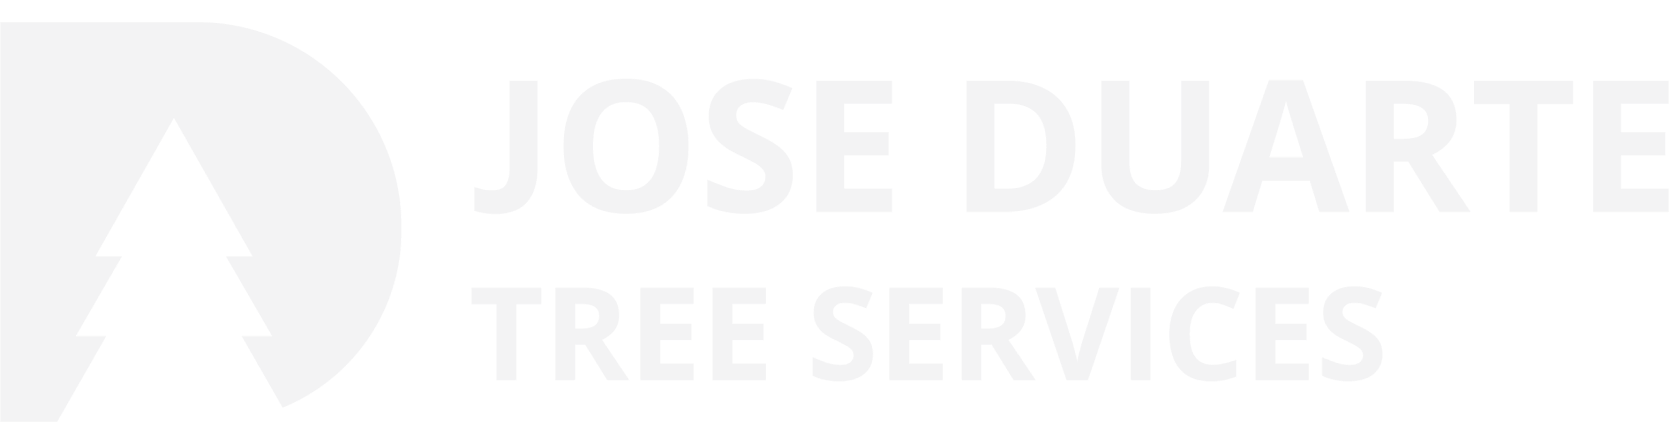 Jose Duarte Tree Service logo